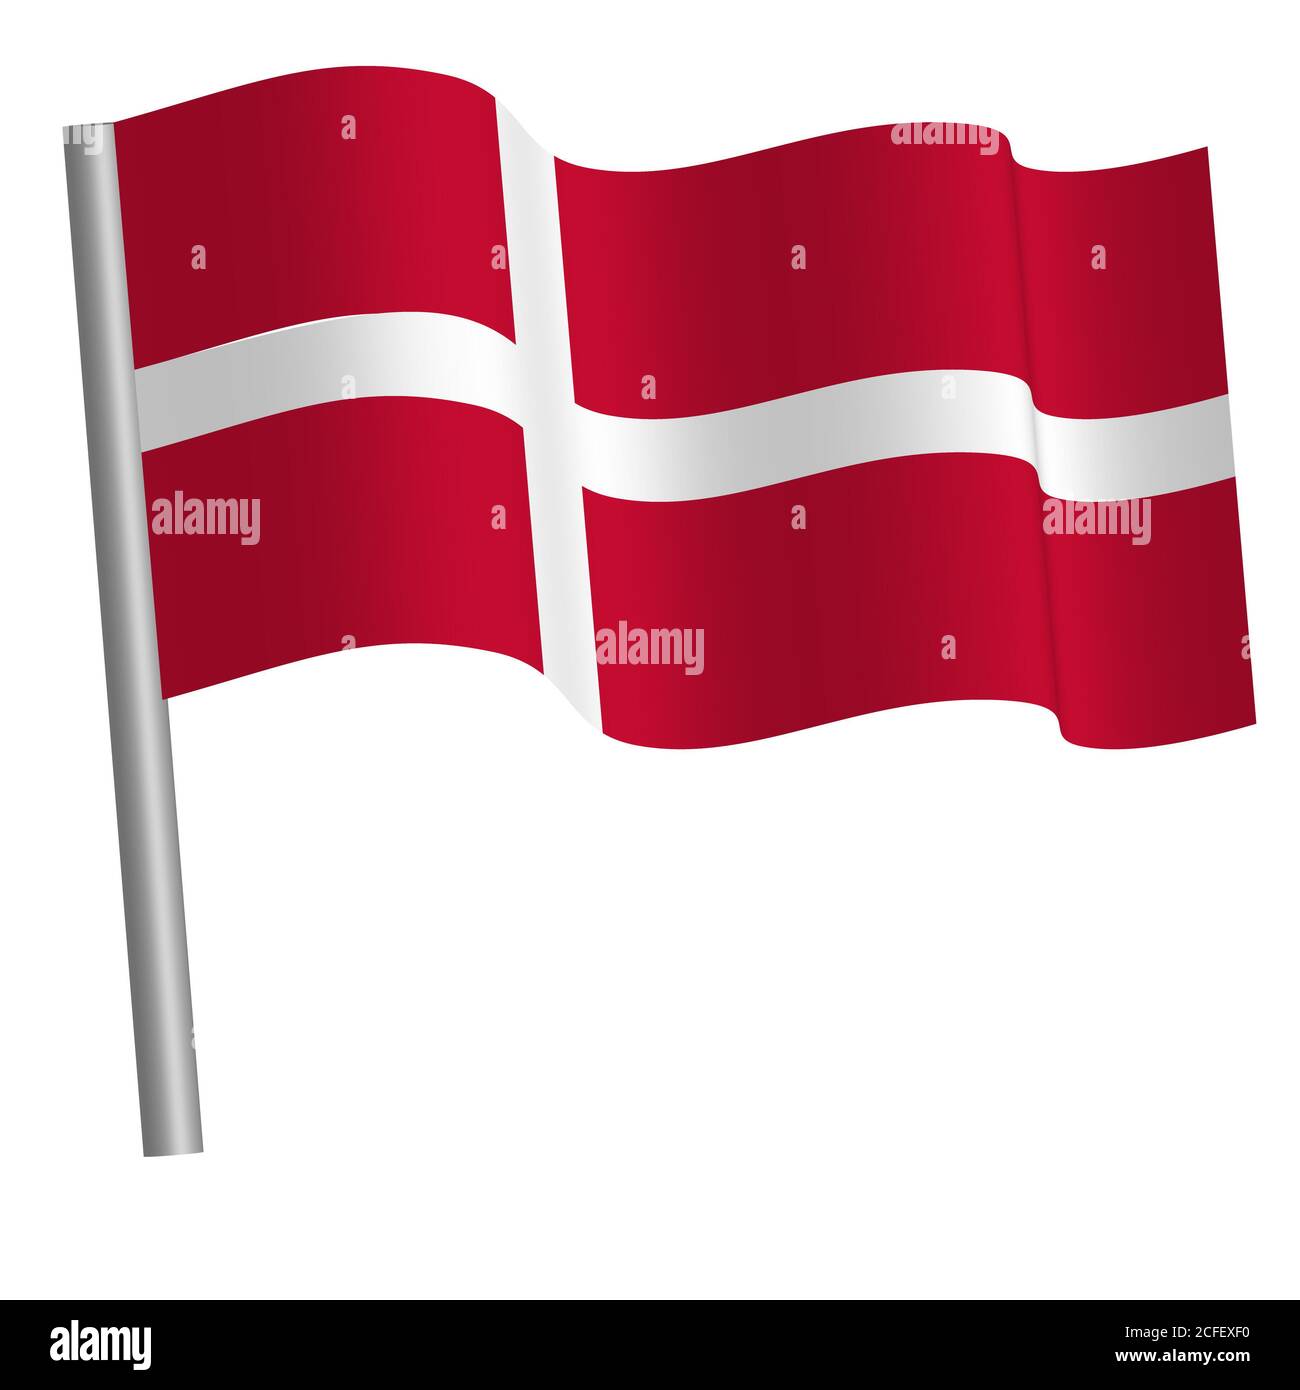 High quality flag waving on a pole Stock Photo